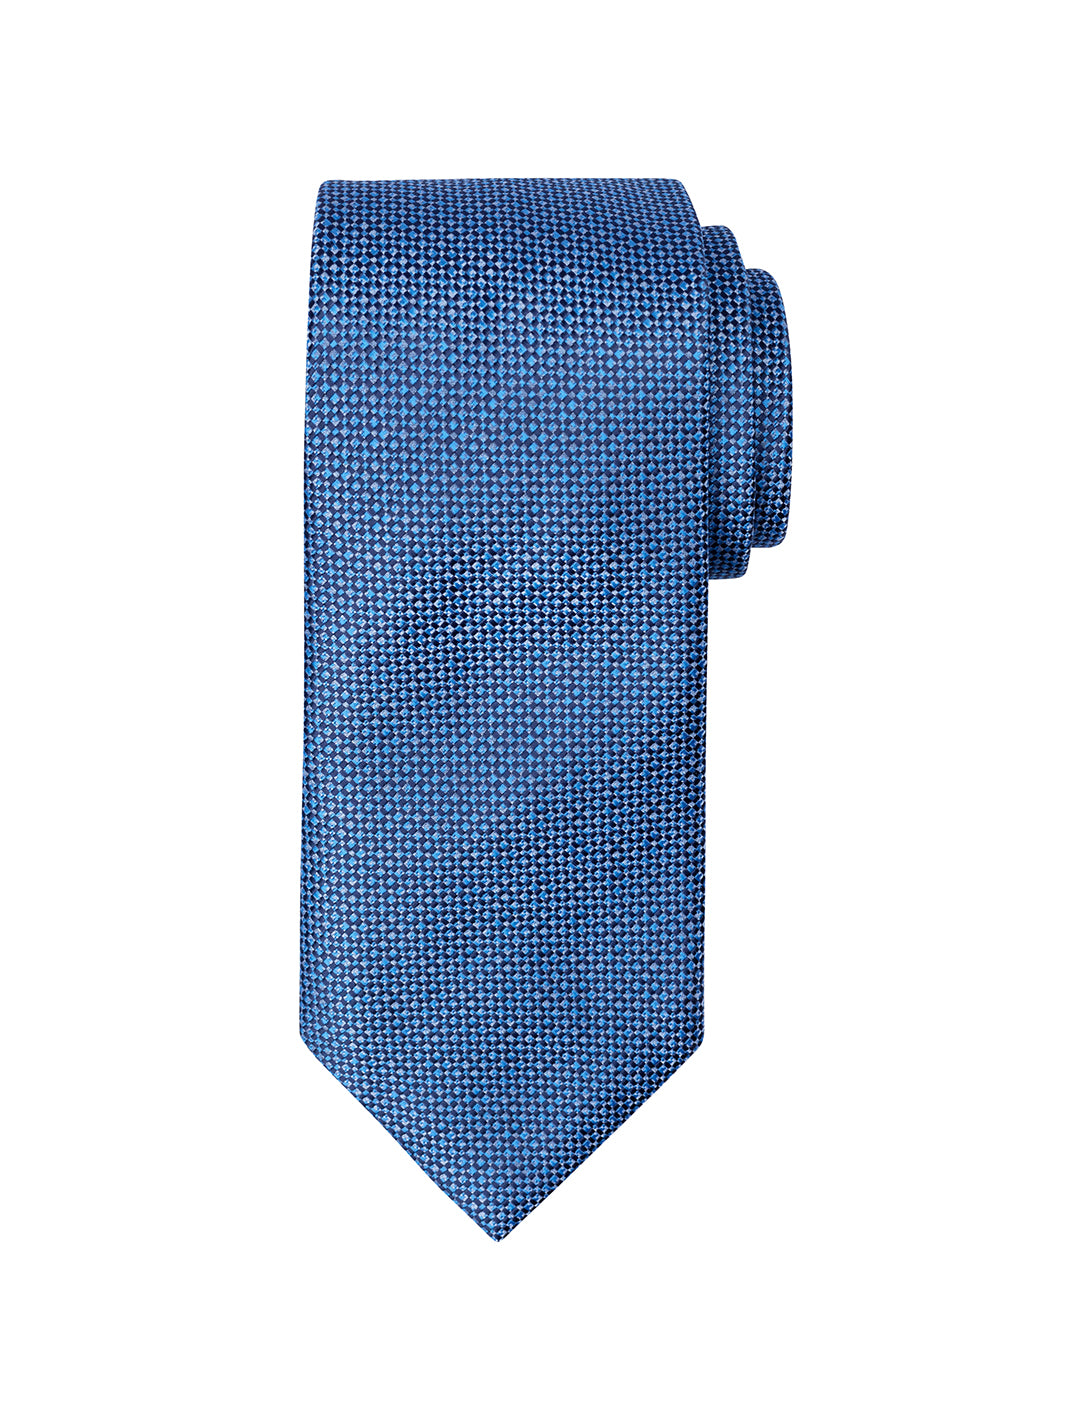 Design Tie in Blue